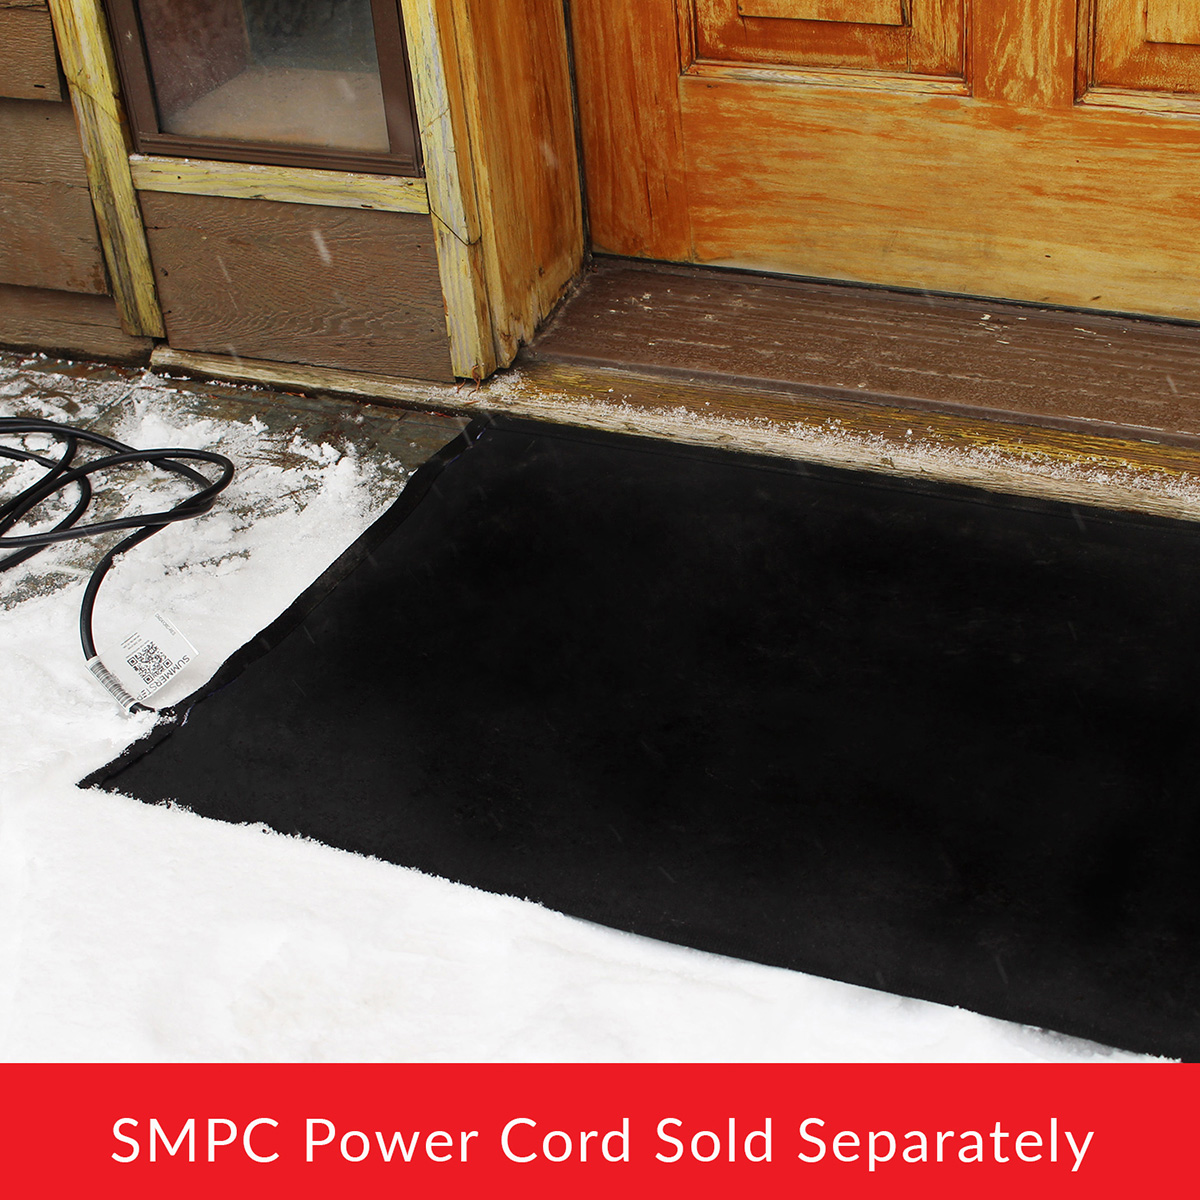 Heated Door Mats, Snow Melting Doormats for Home Use